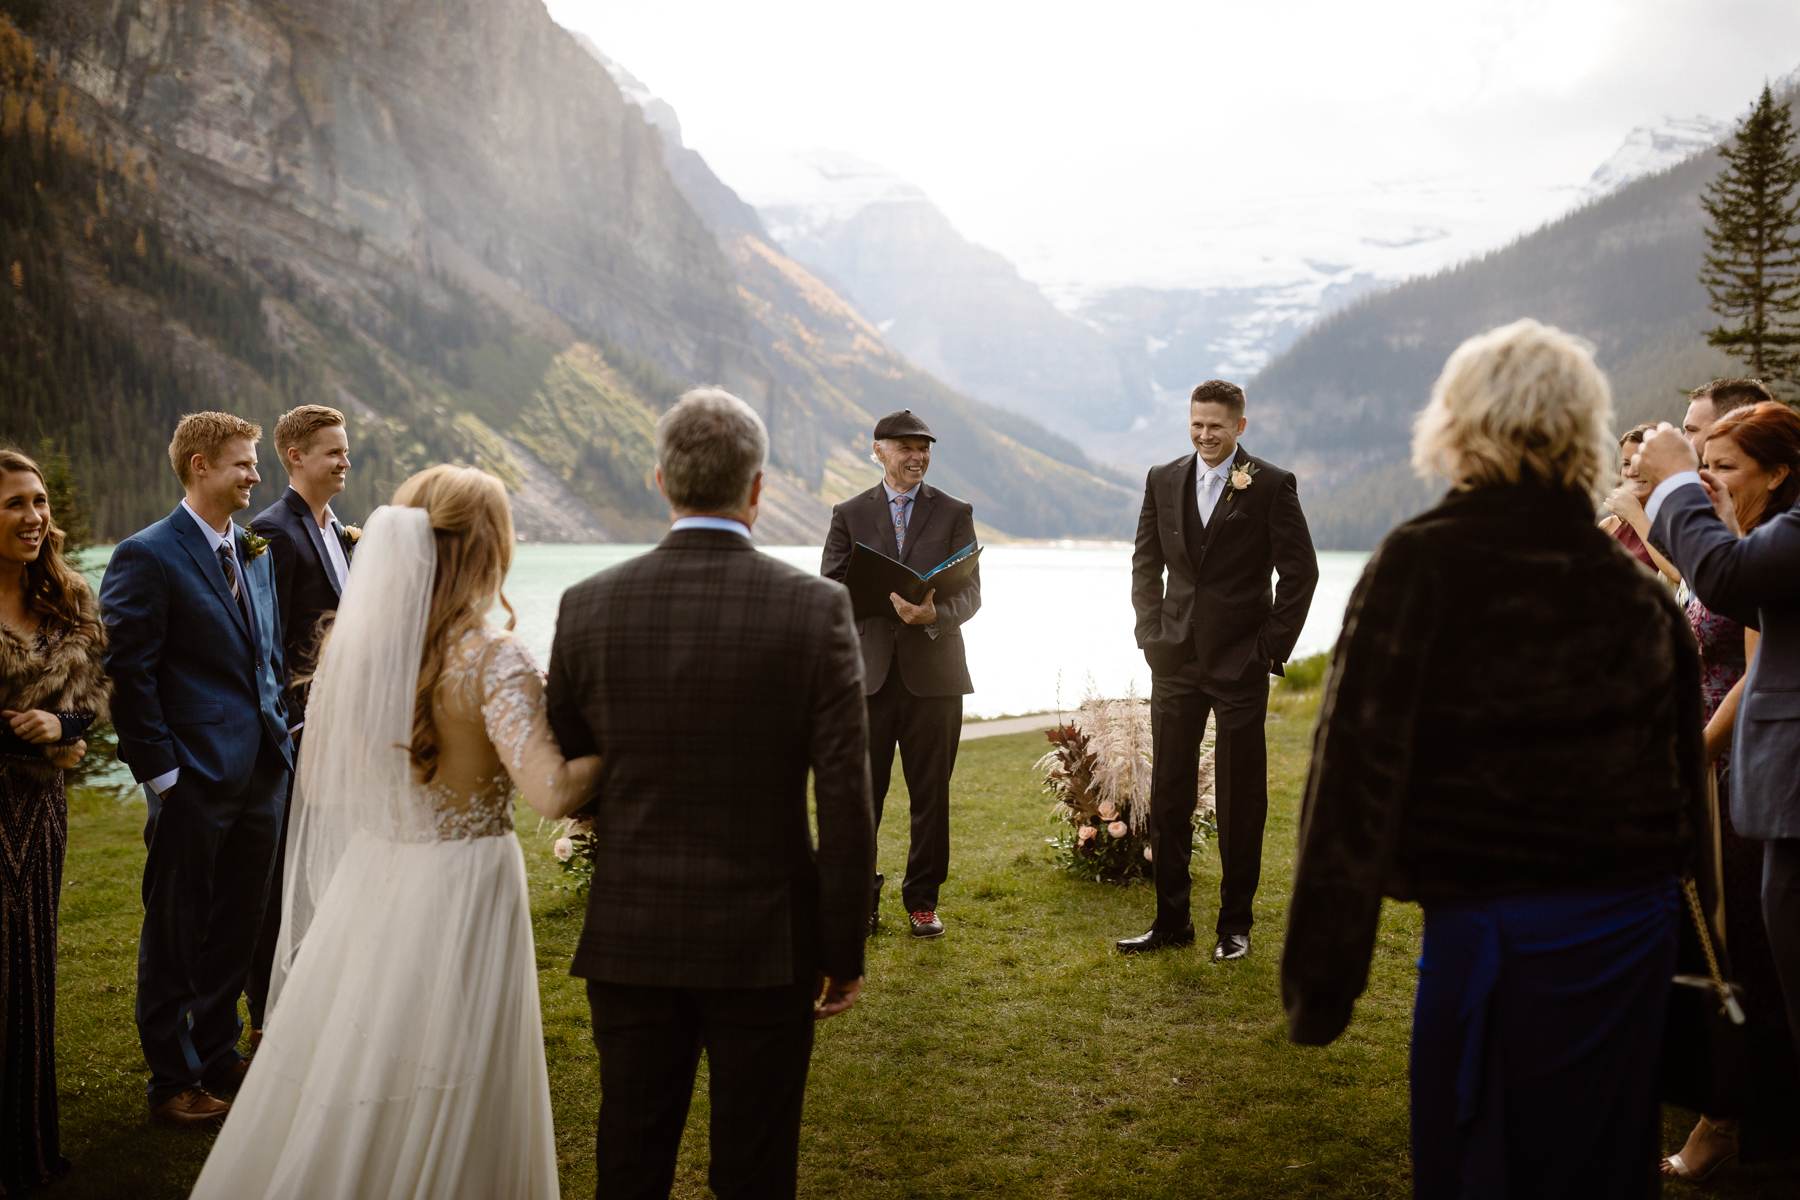 Moraine Lake wedding photos - Image 10